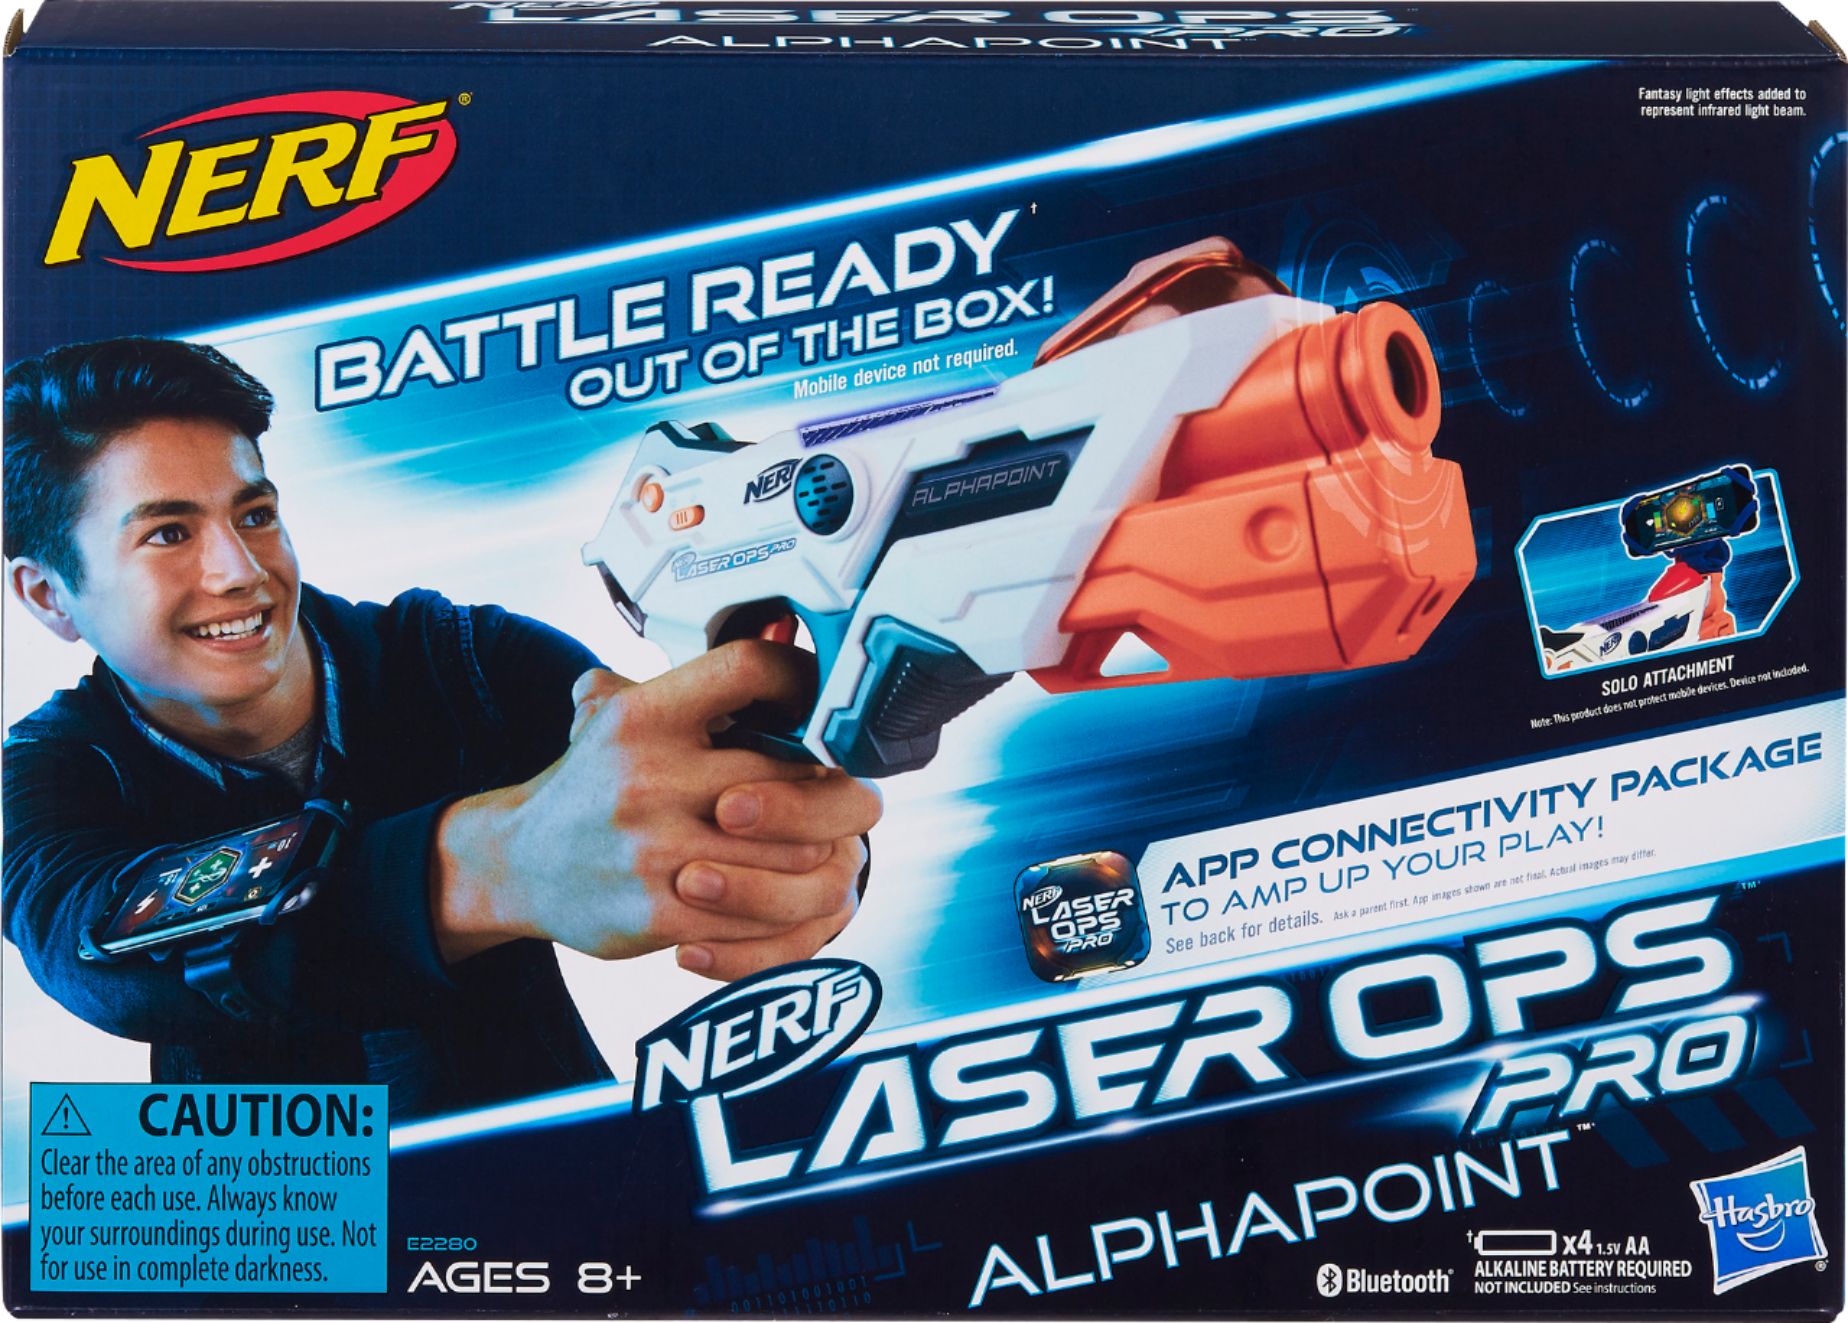 NERF Laser Ops Pro Alphapoint E2280 Battle Ready for sale online